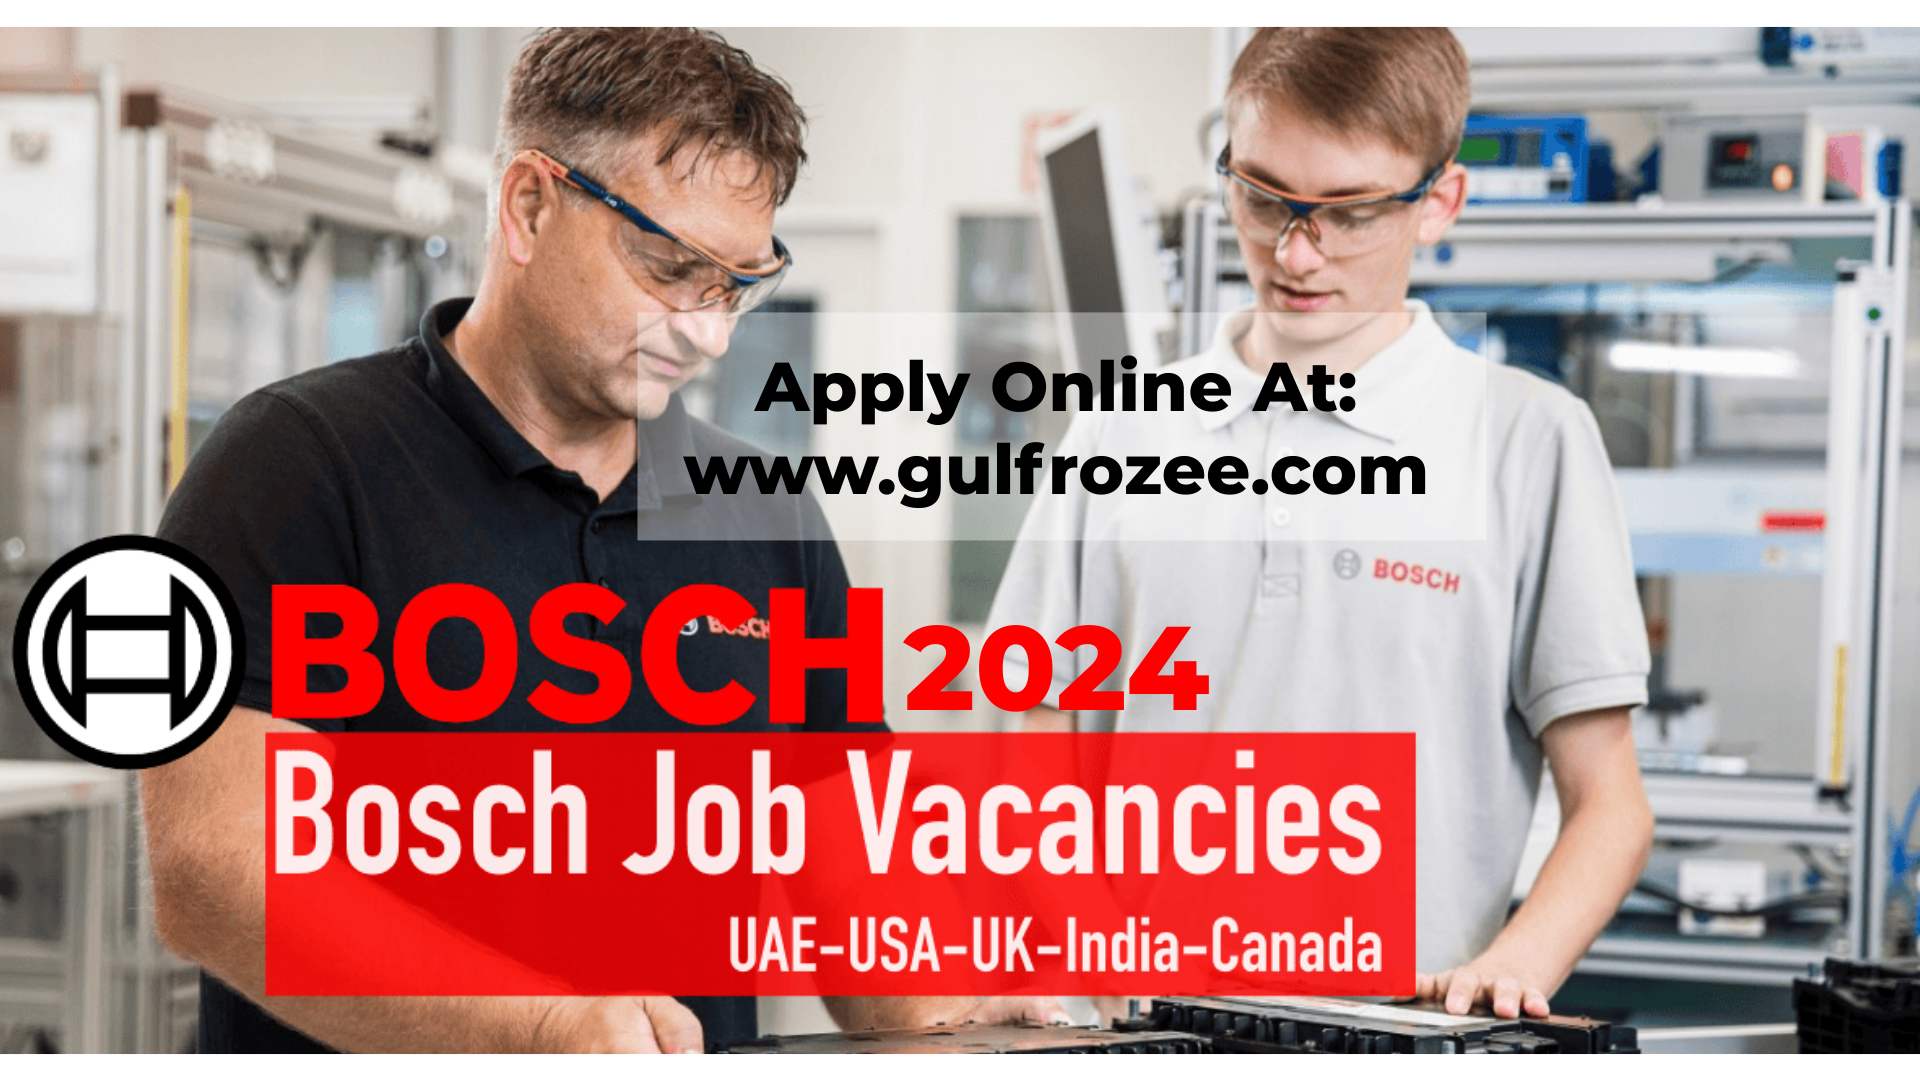 Bosch Jobs UAE-USA-UK-India-Canada 2024